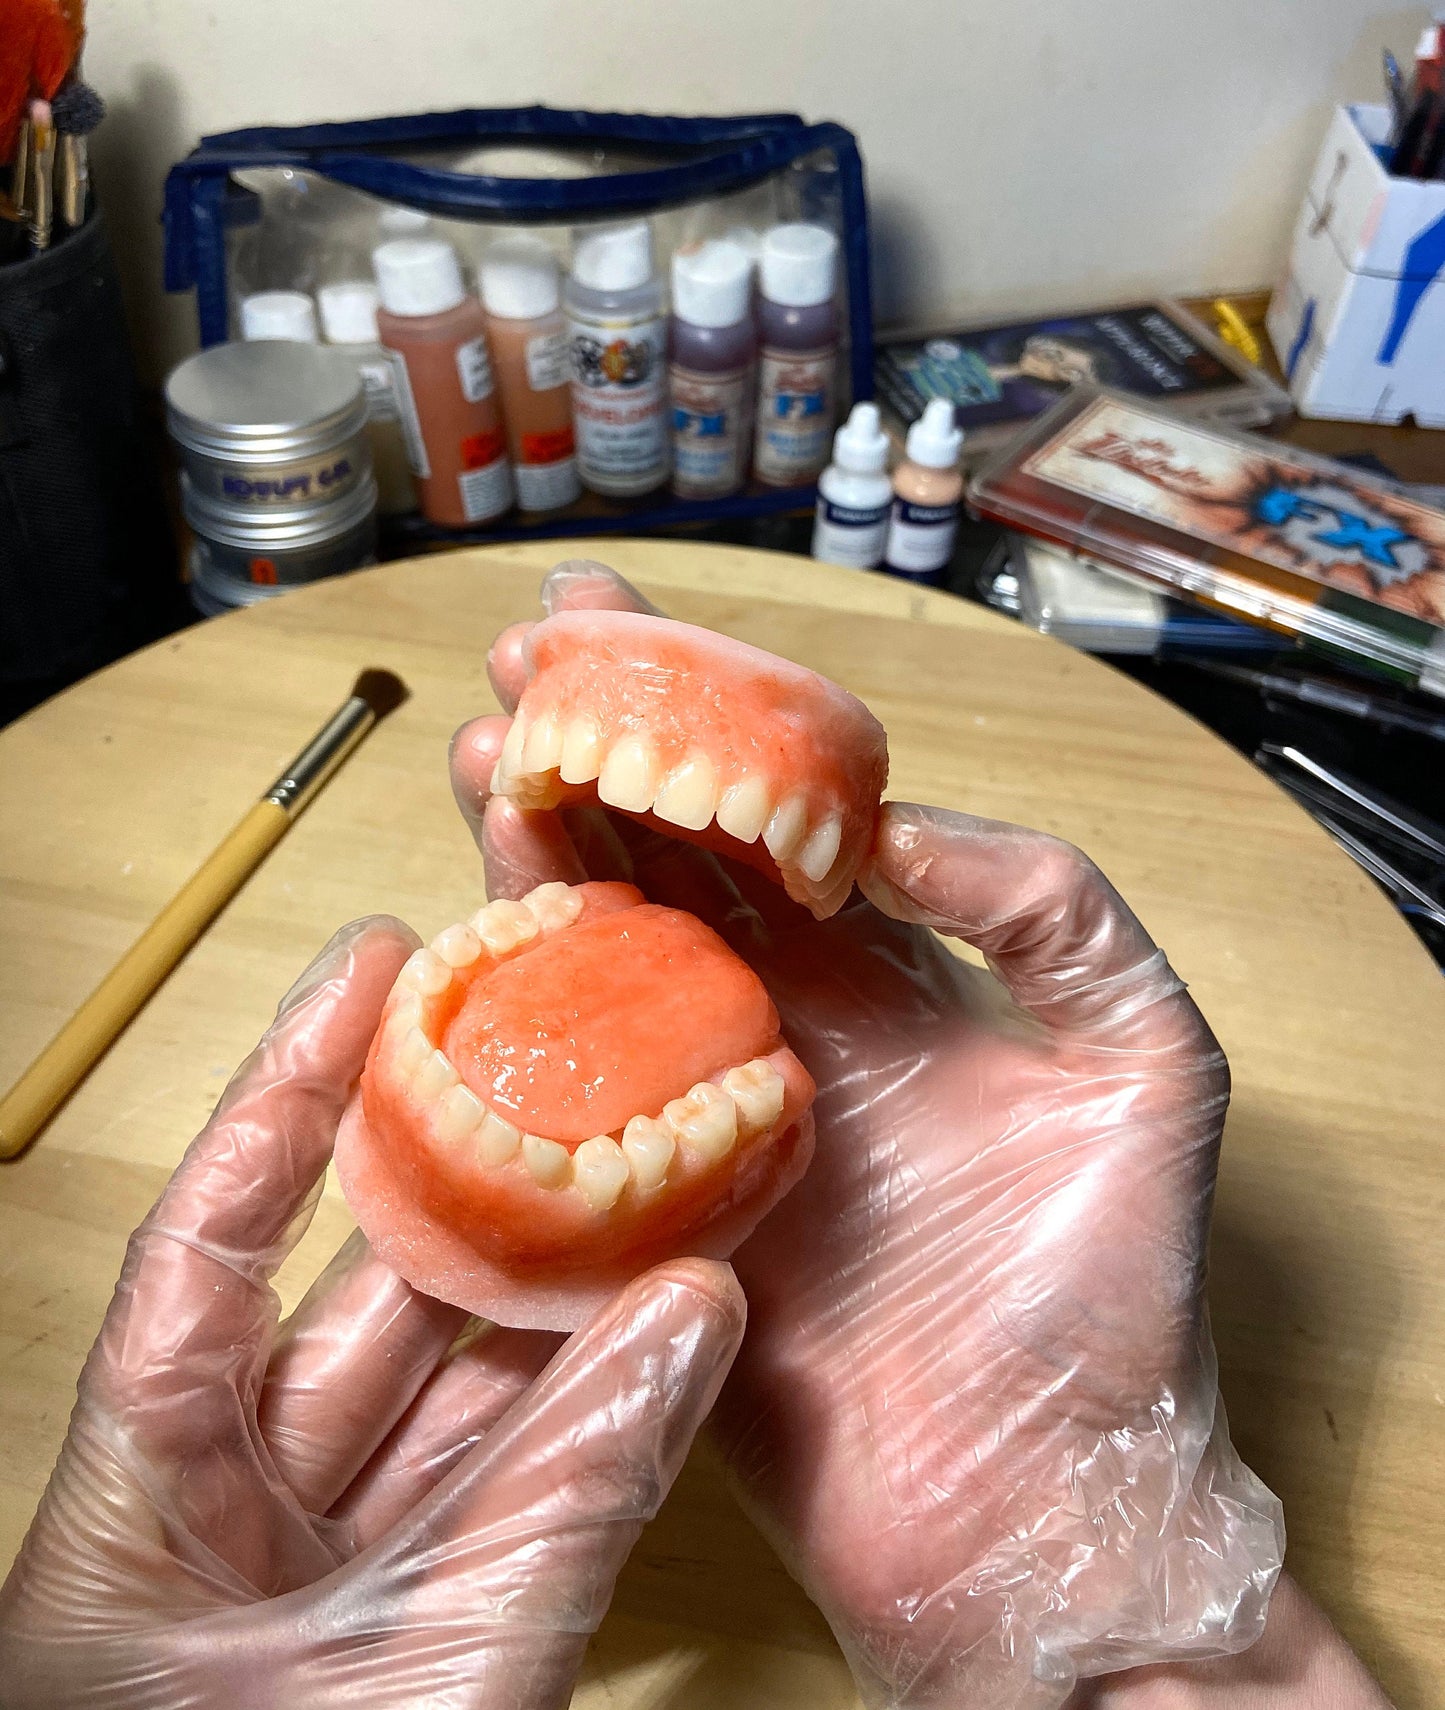 Prop dentures - Fake teeth - SFX make-up - Escape room - Halloween Decoration